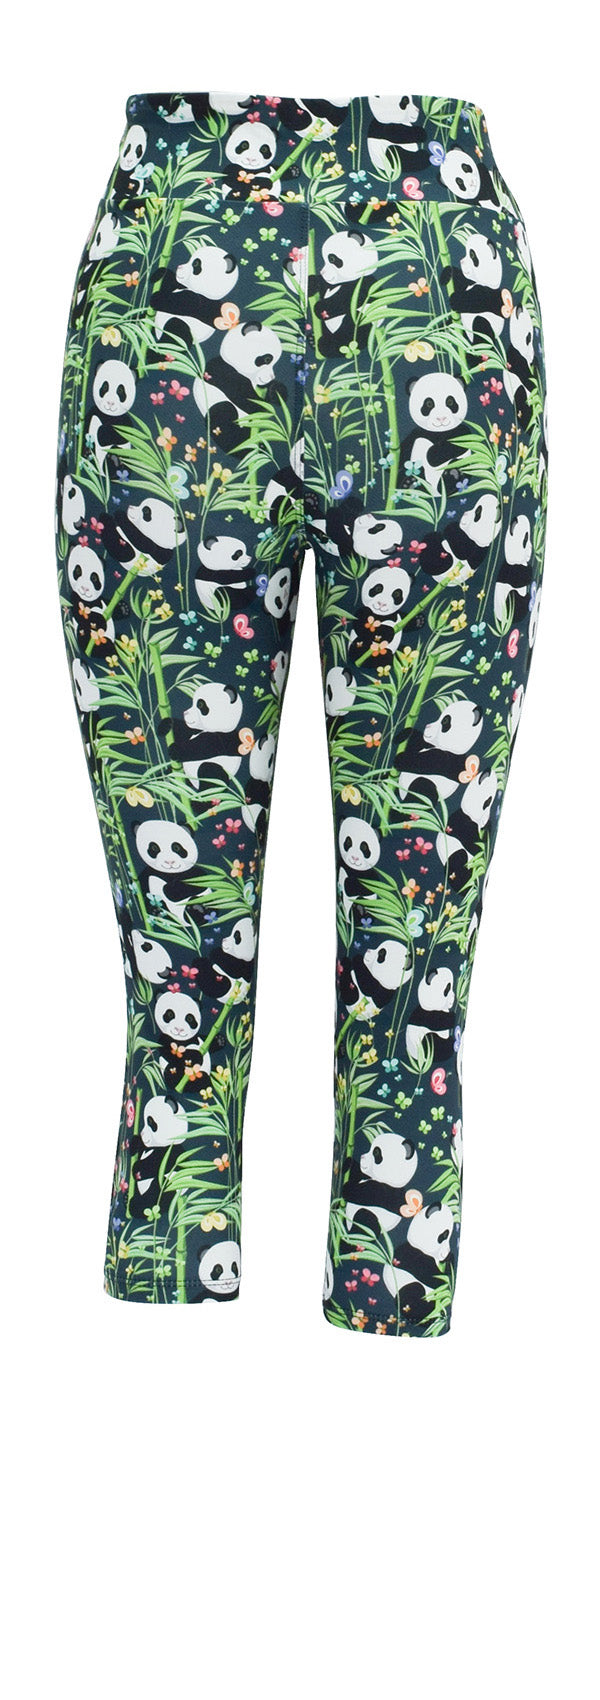 Panda On The Loose-Adult Leggings